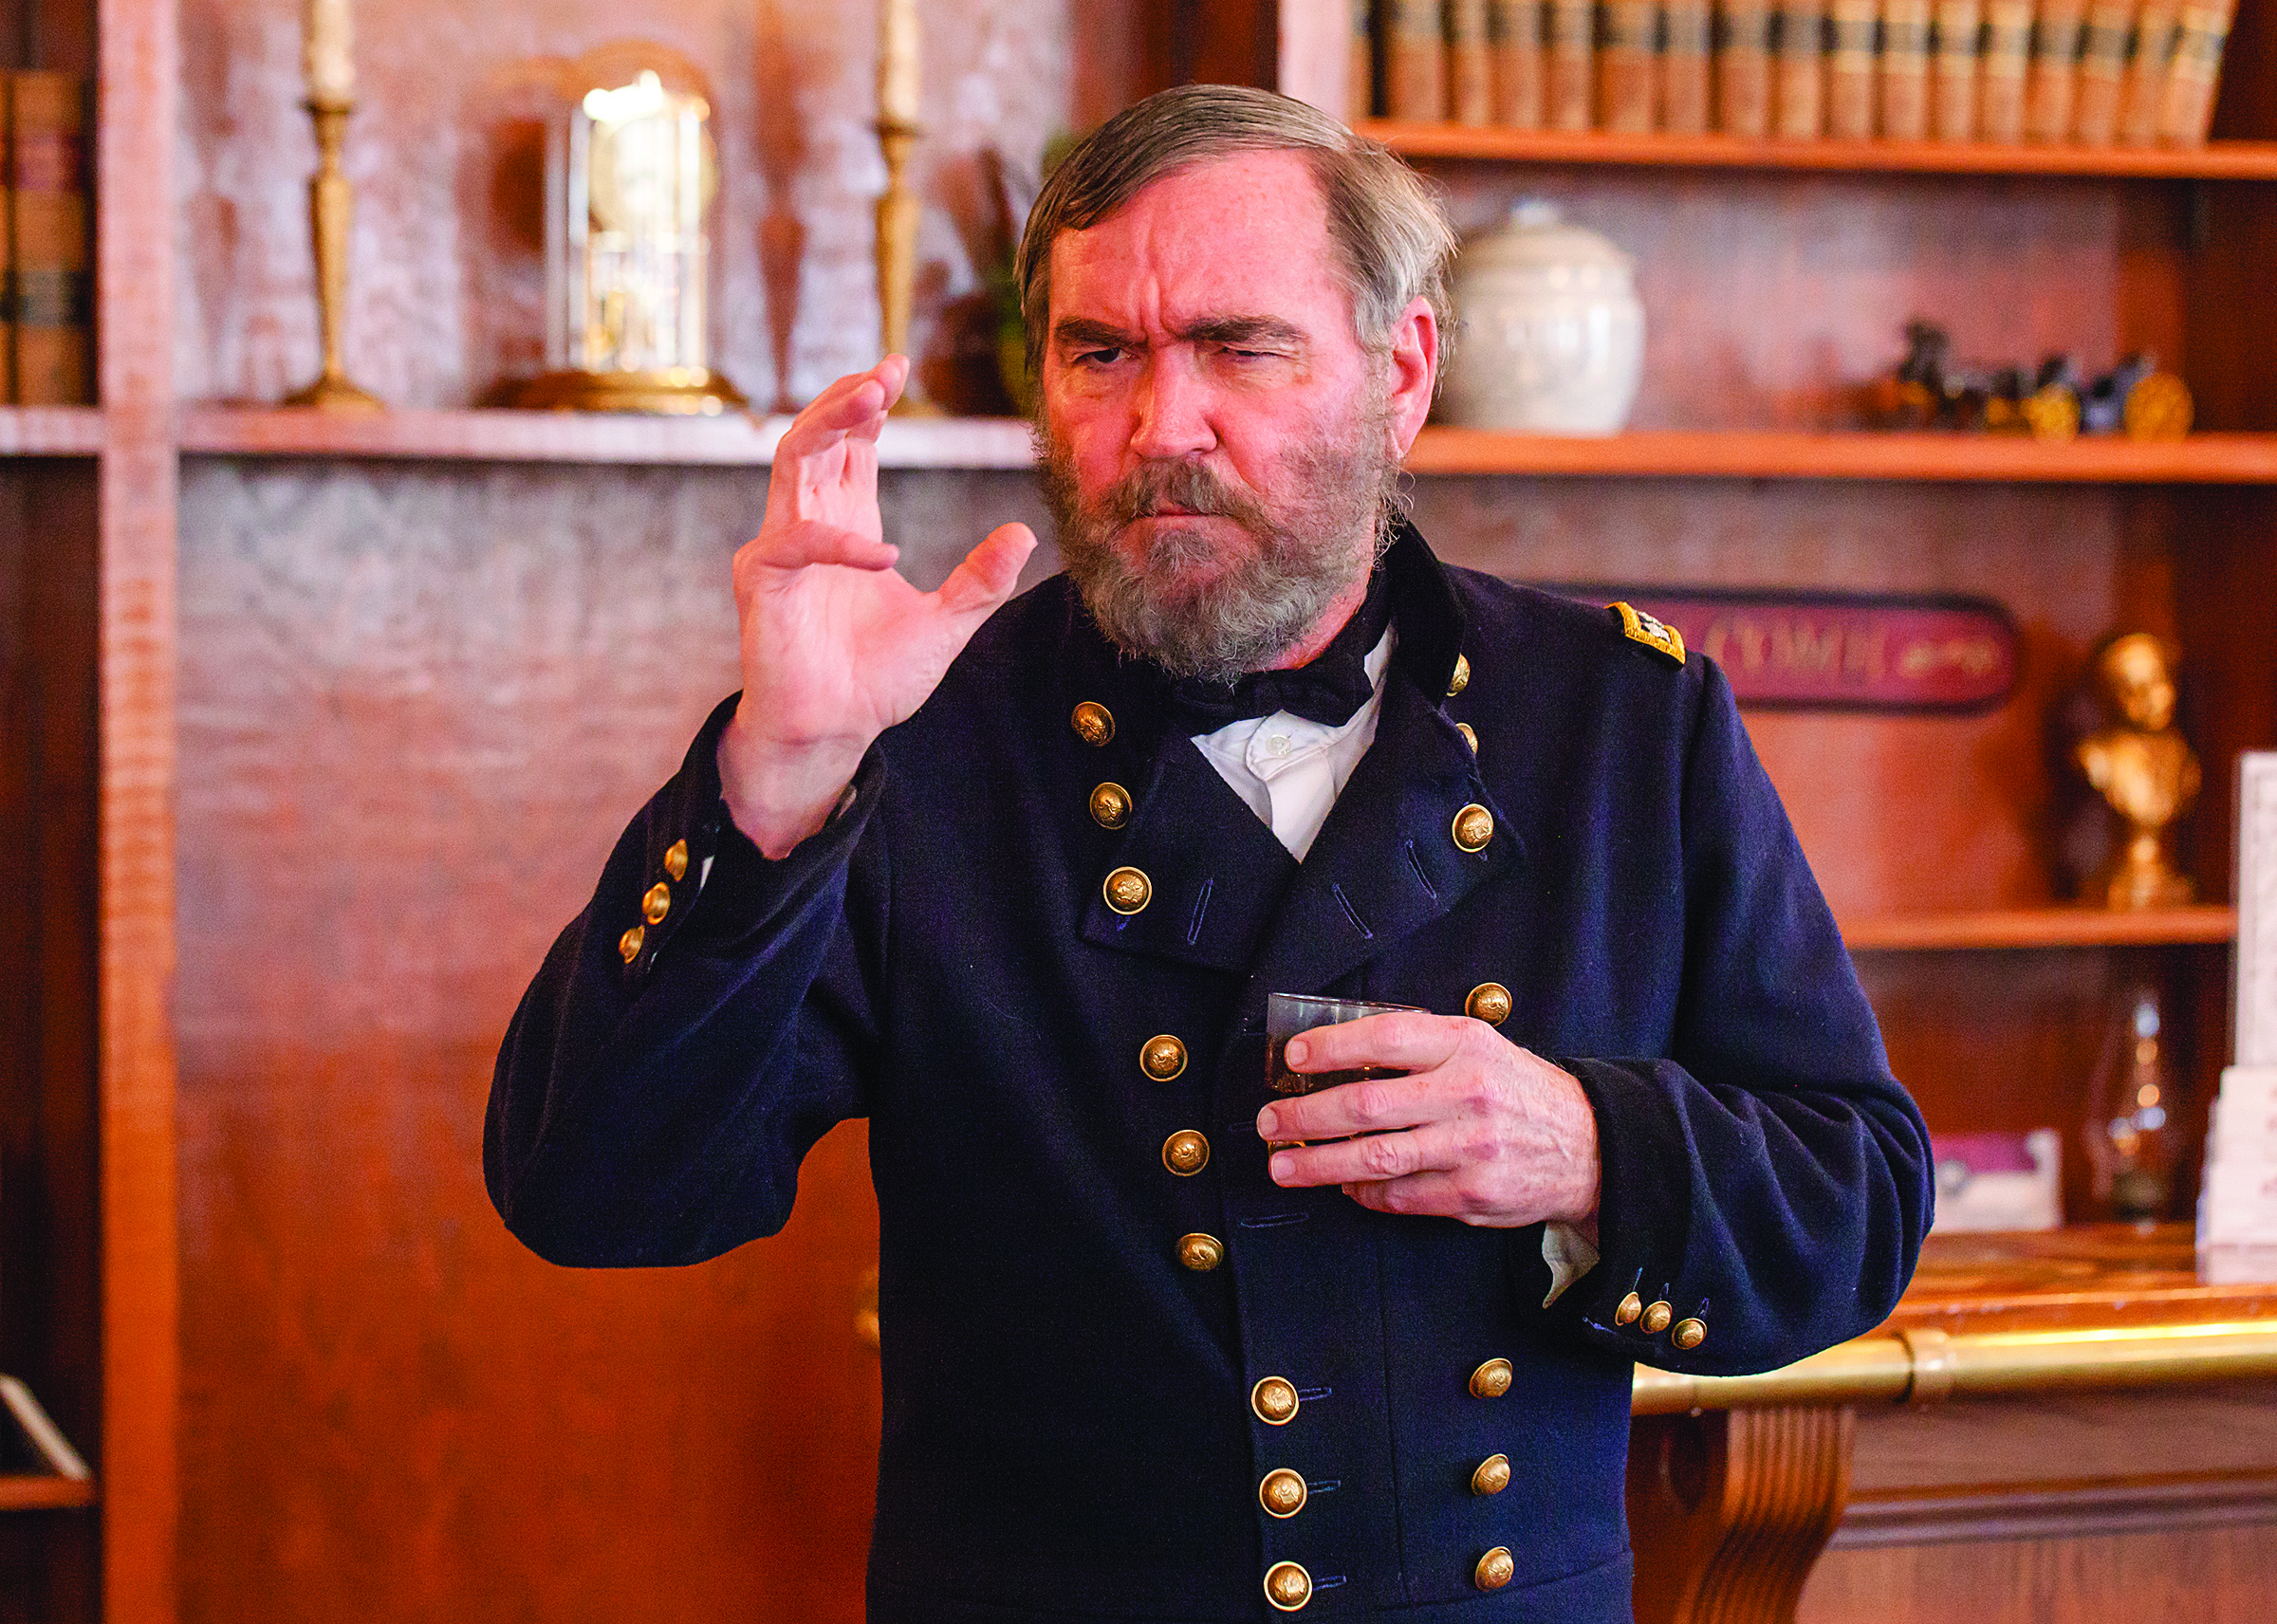 Pete Grady as General Grant